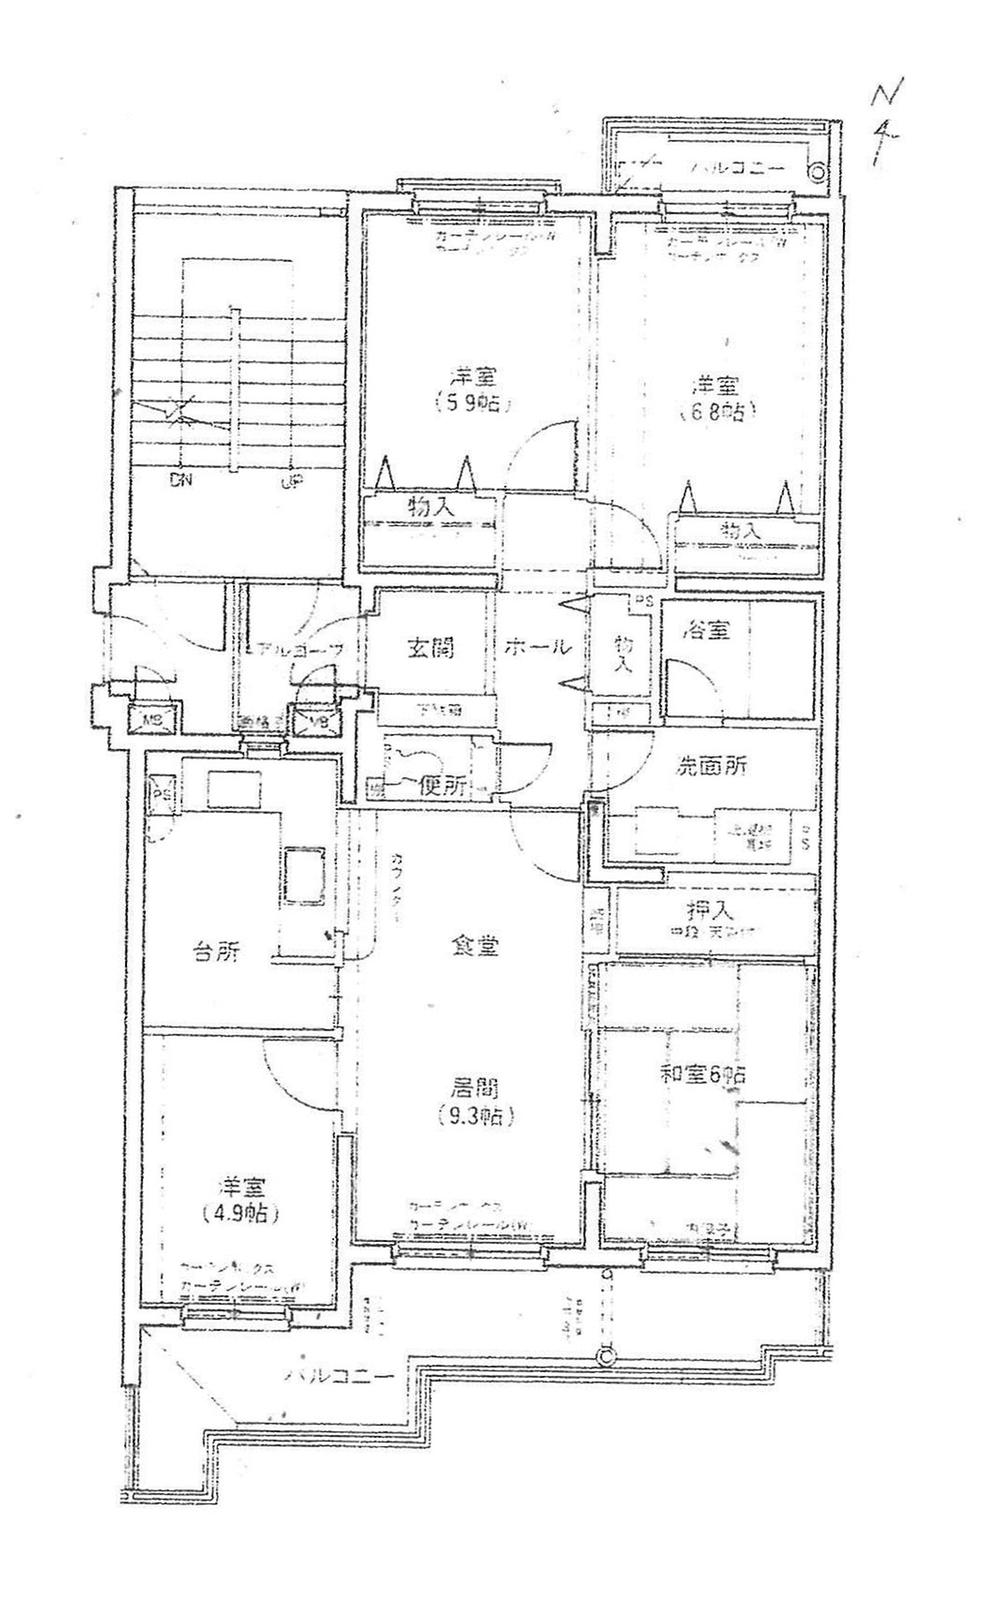 Floor plan. 4LDK, Price 17.8 million yen, Occupied area 87.51 sq m , Balcony area 14.73 sq m